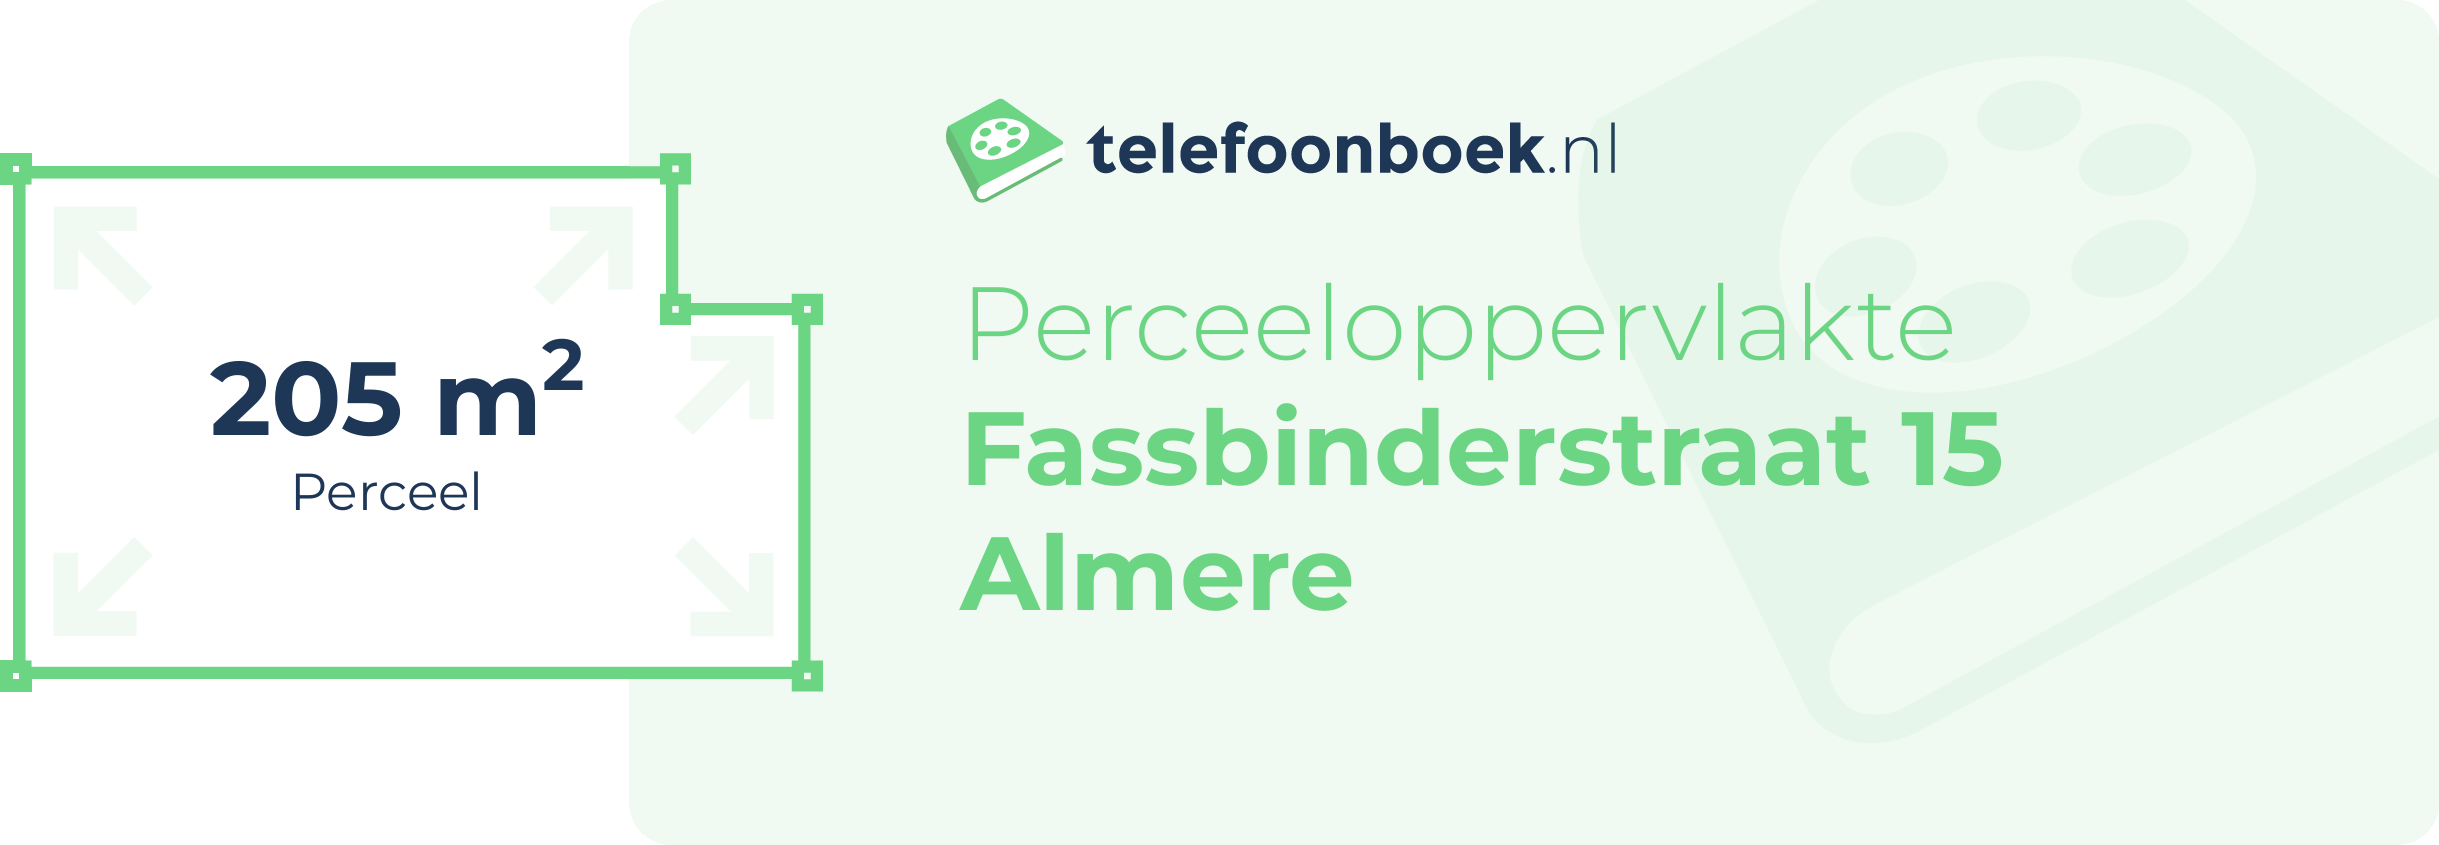 Perceeloppervlakte Fassbinderstraat 15 Almere